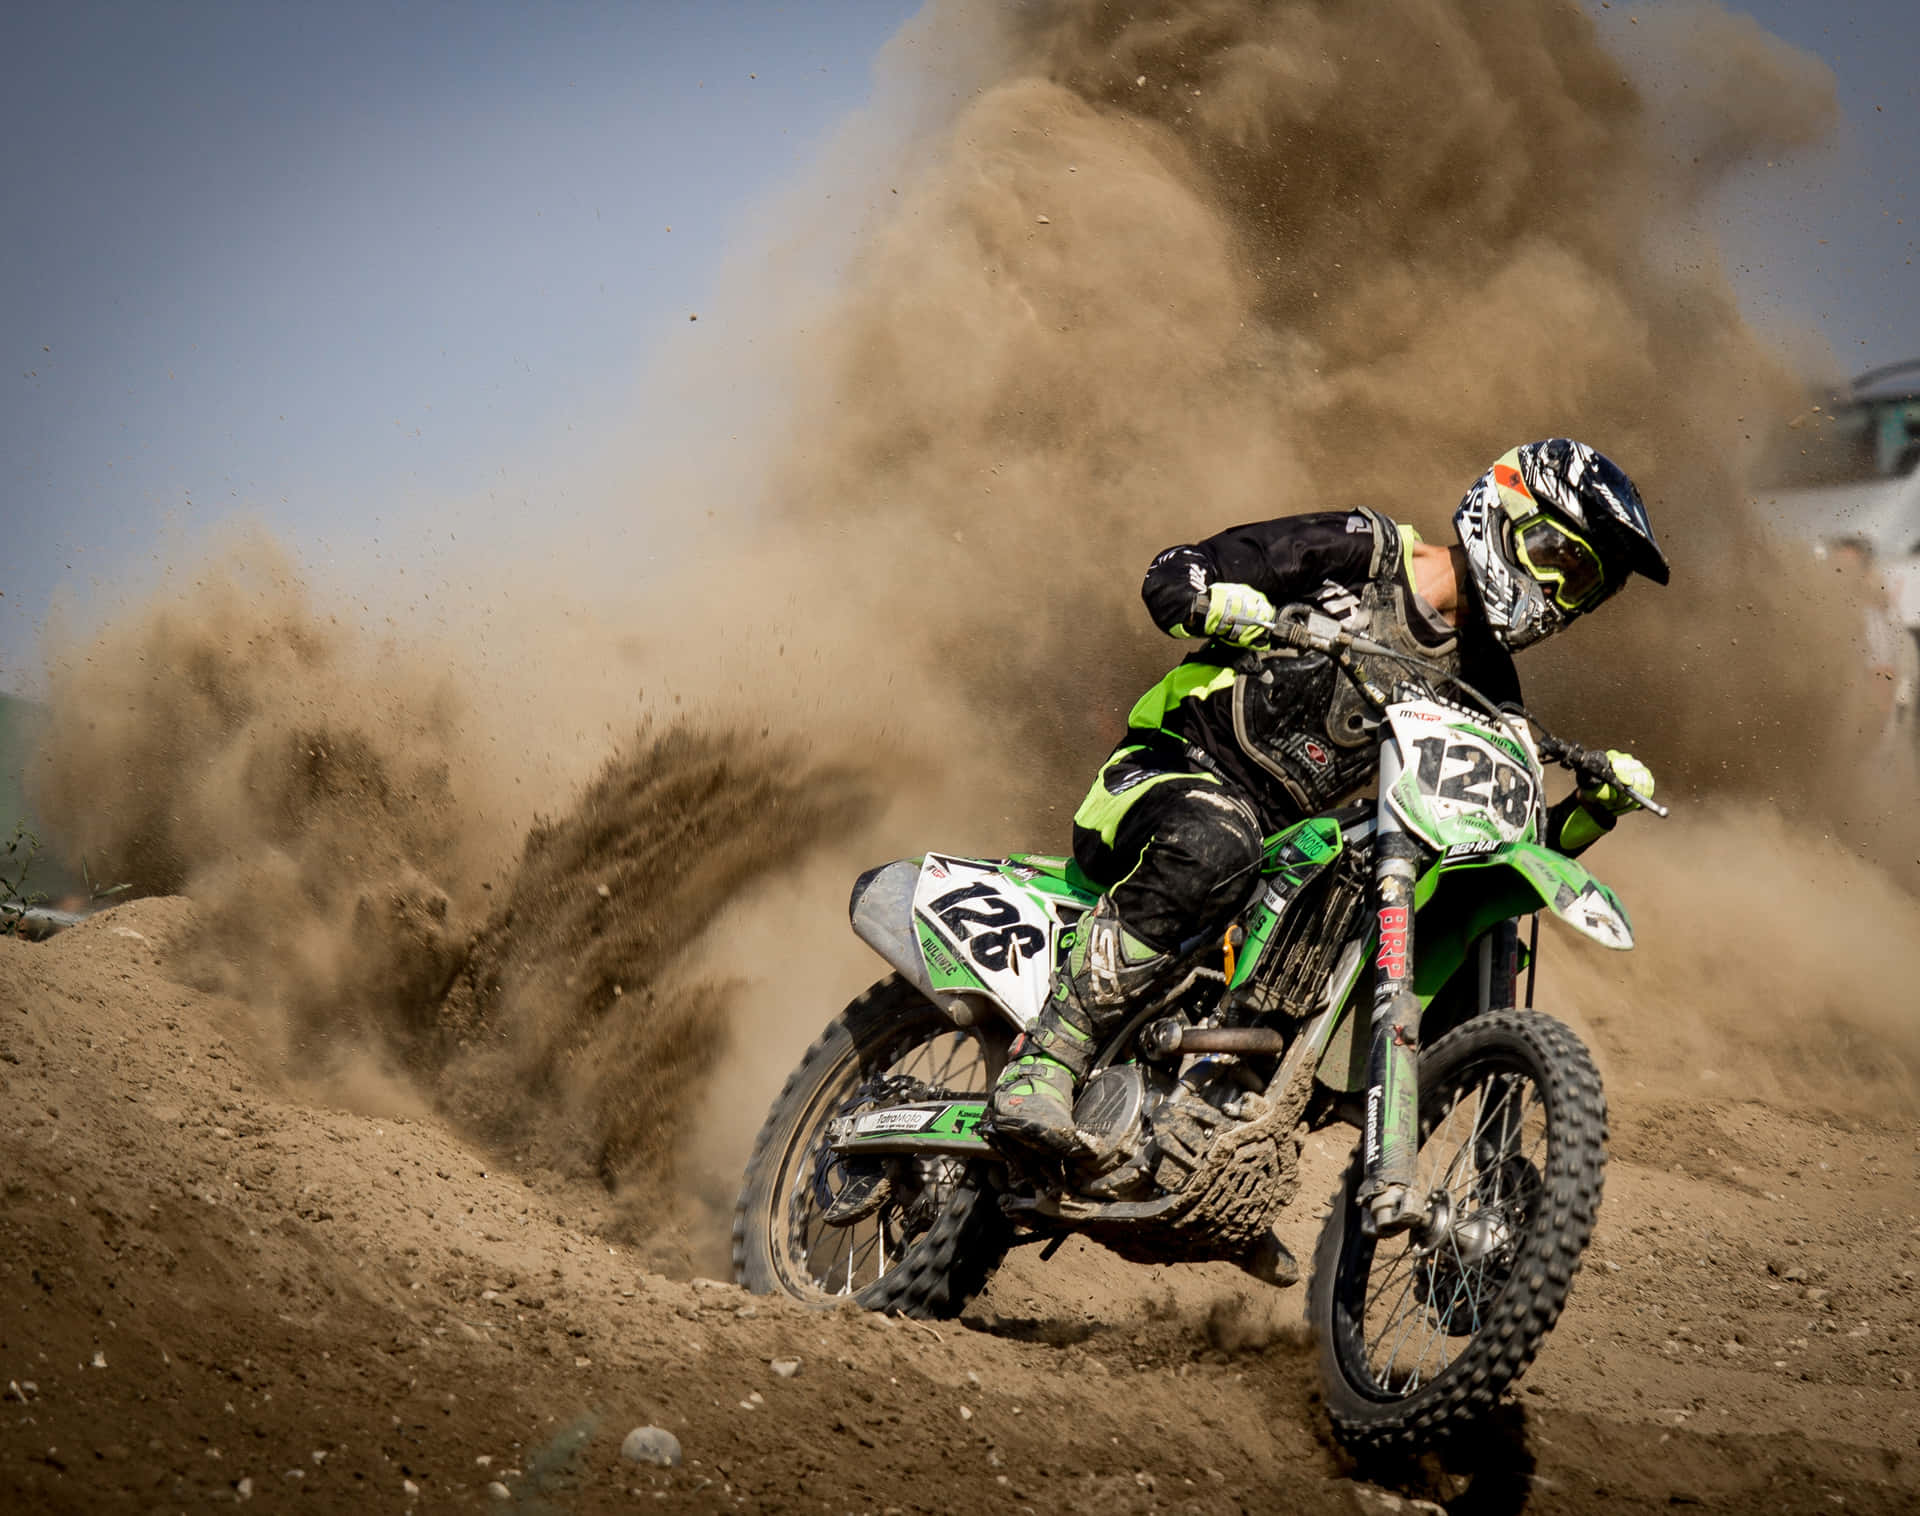 Mud Dust Motorcross Dirt Bike Wallpaper